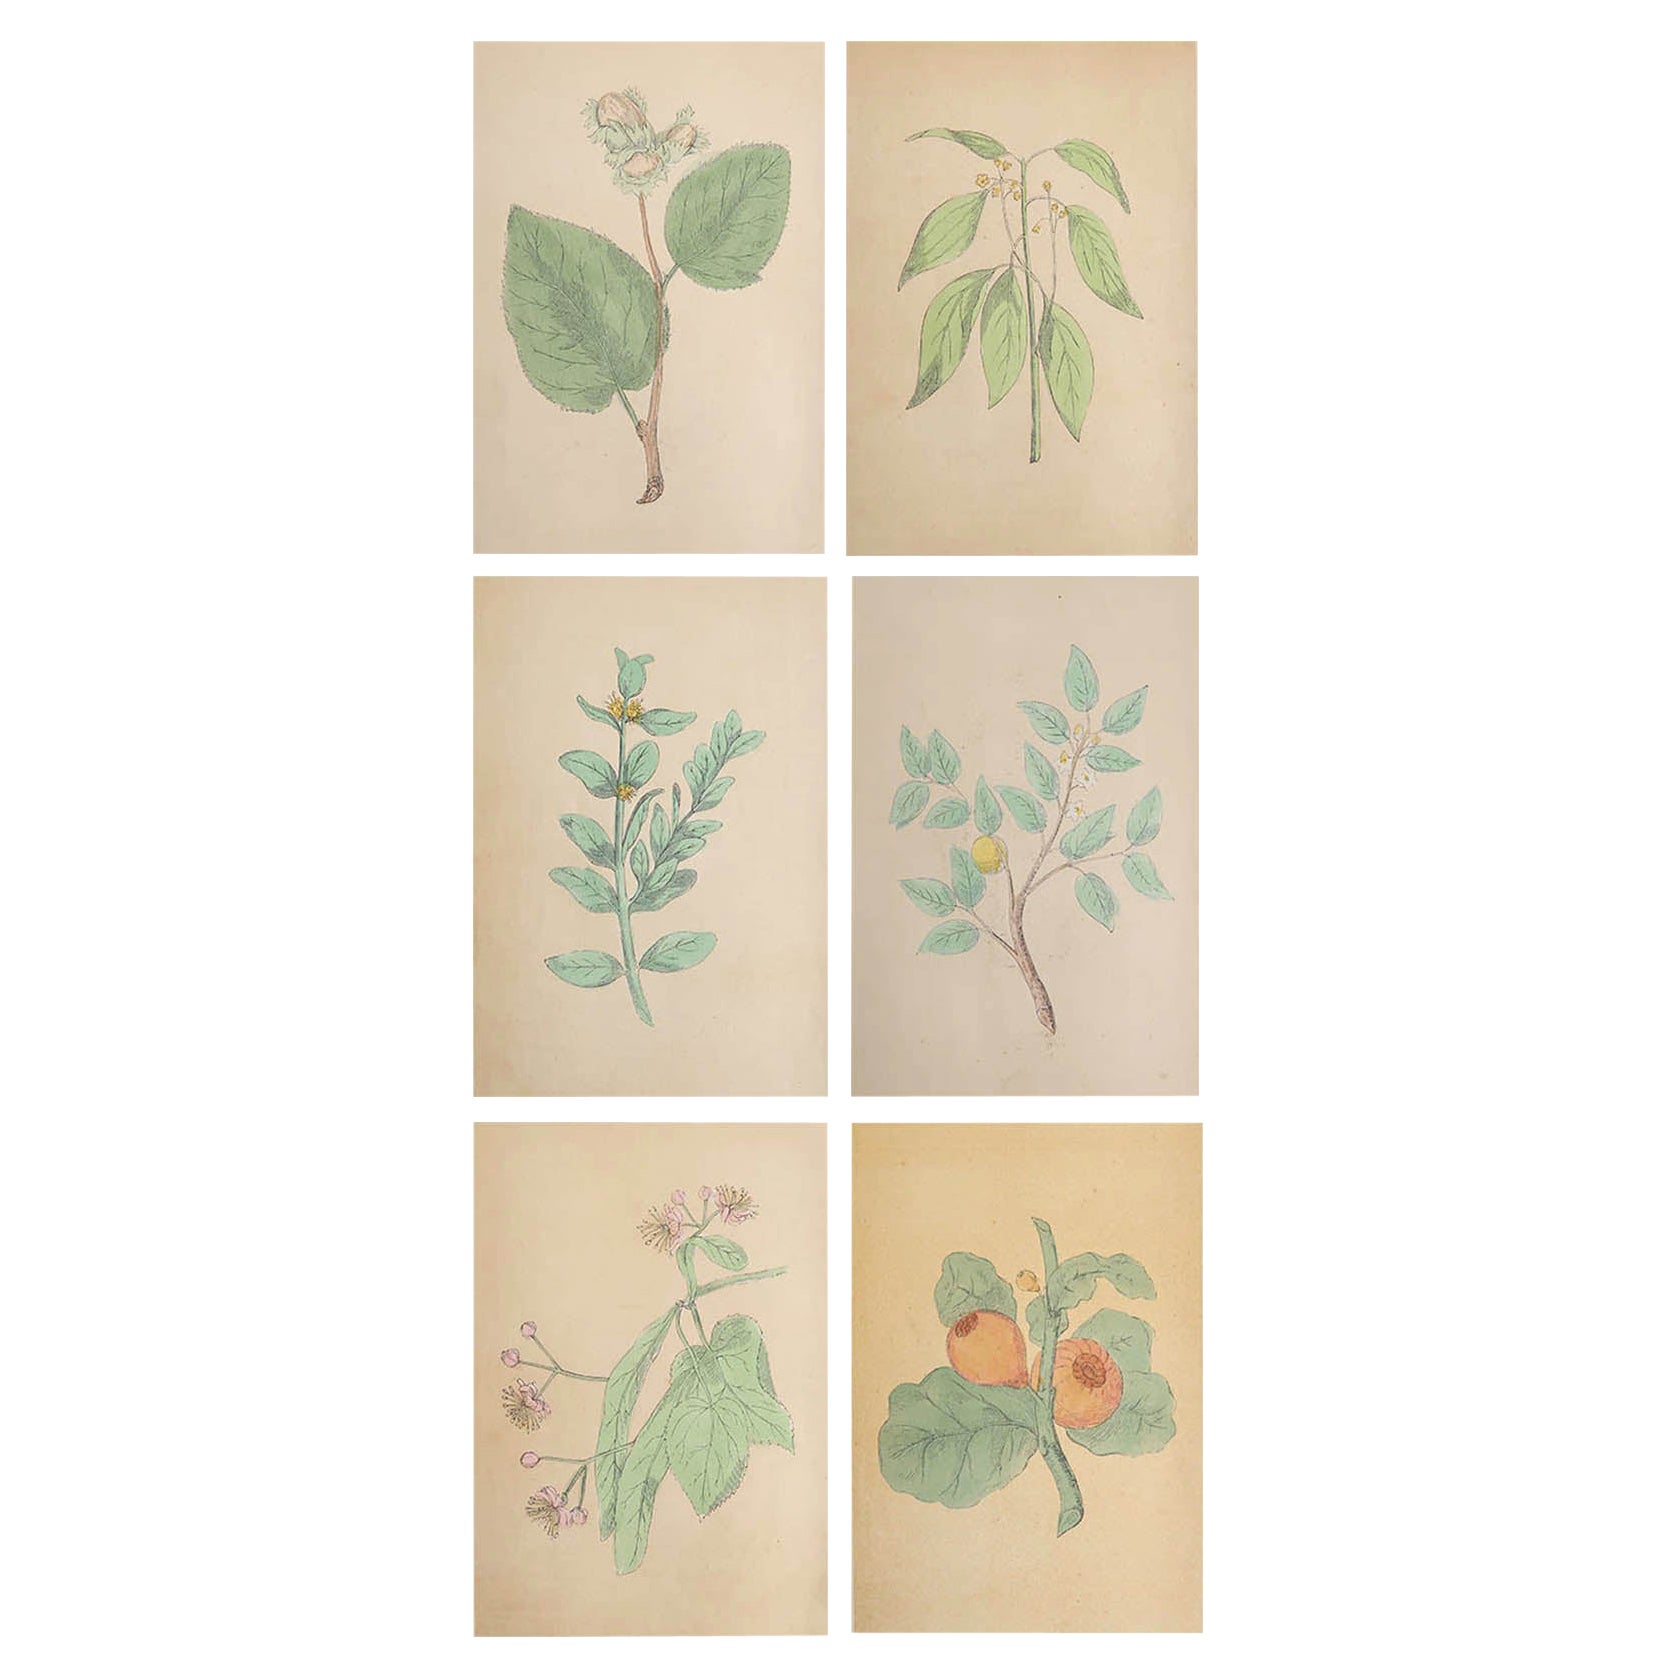 Set of 6 Original Antique Prints of Trees, circa 1850